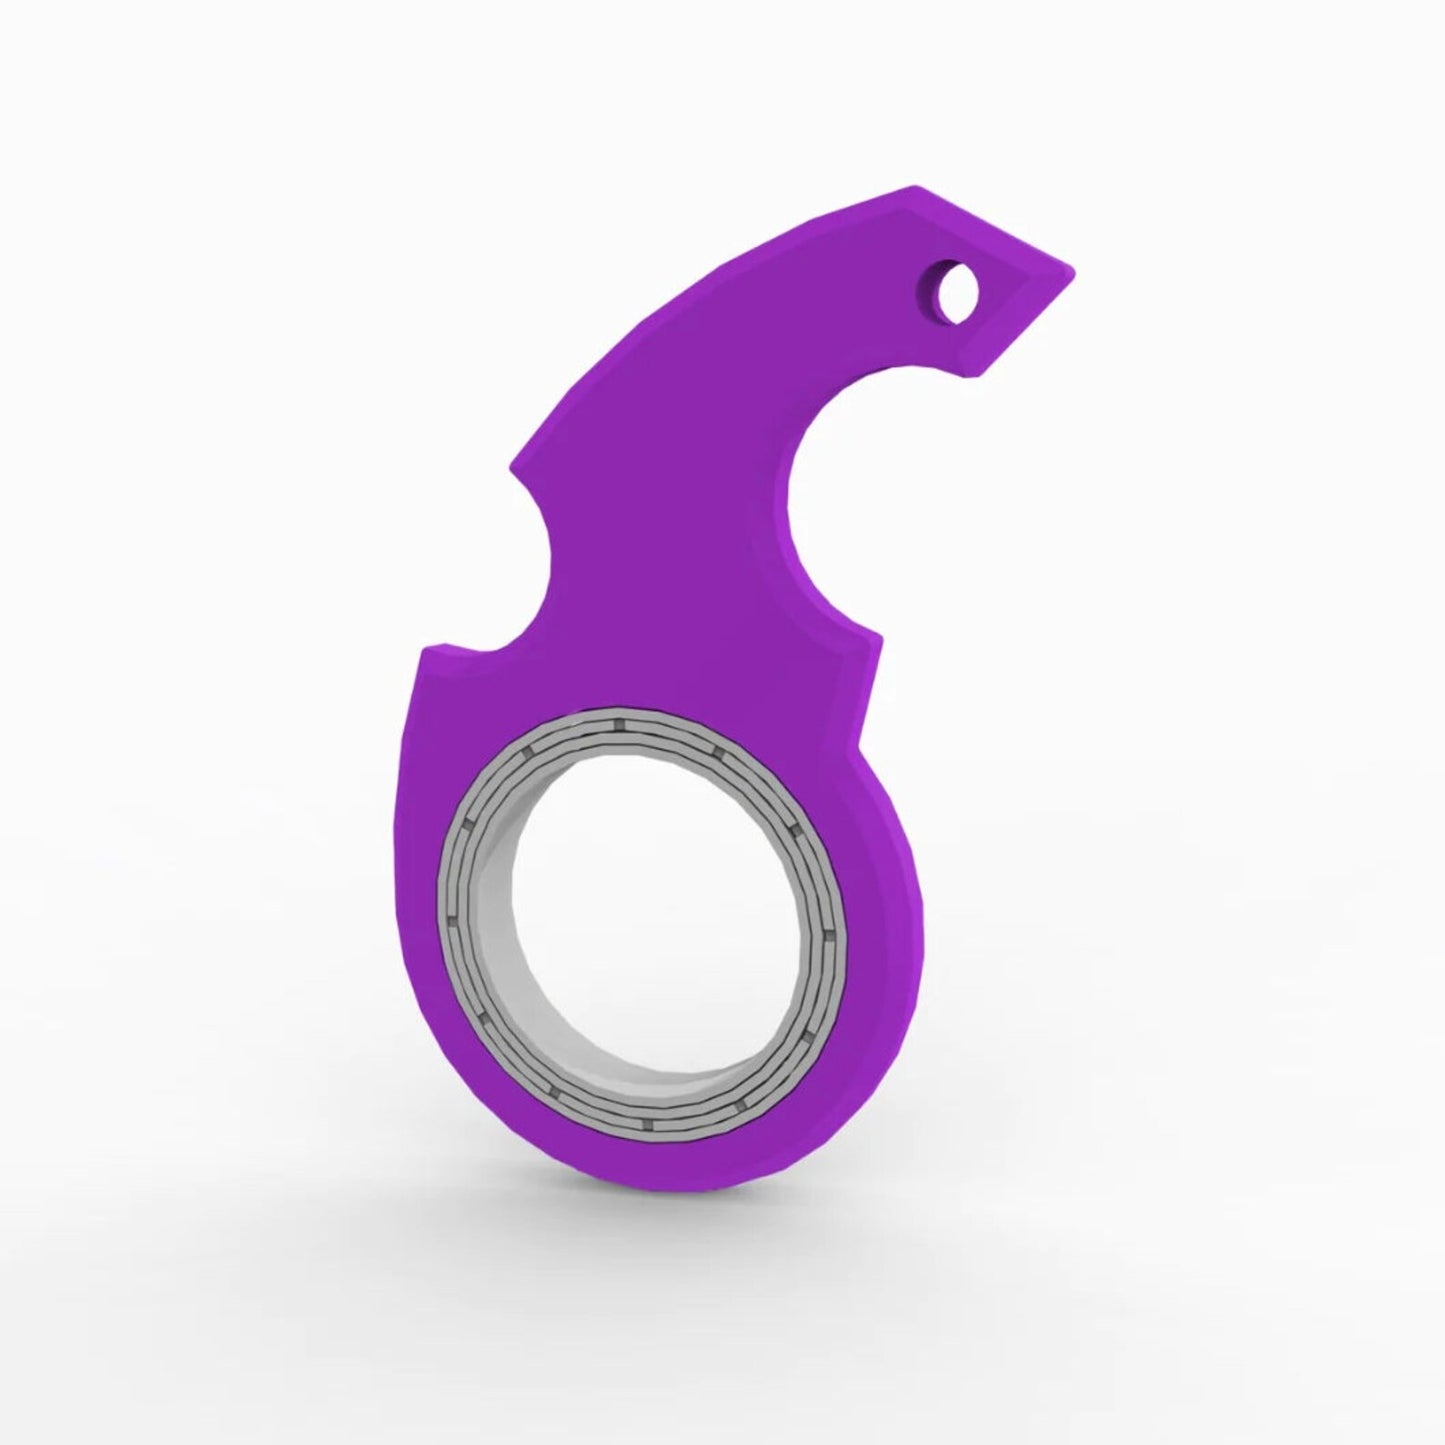 The NinjaSpinner Keychain